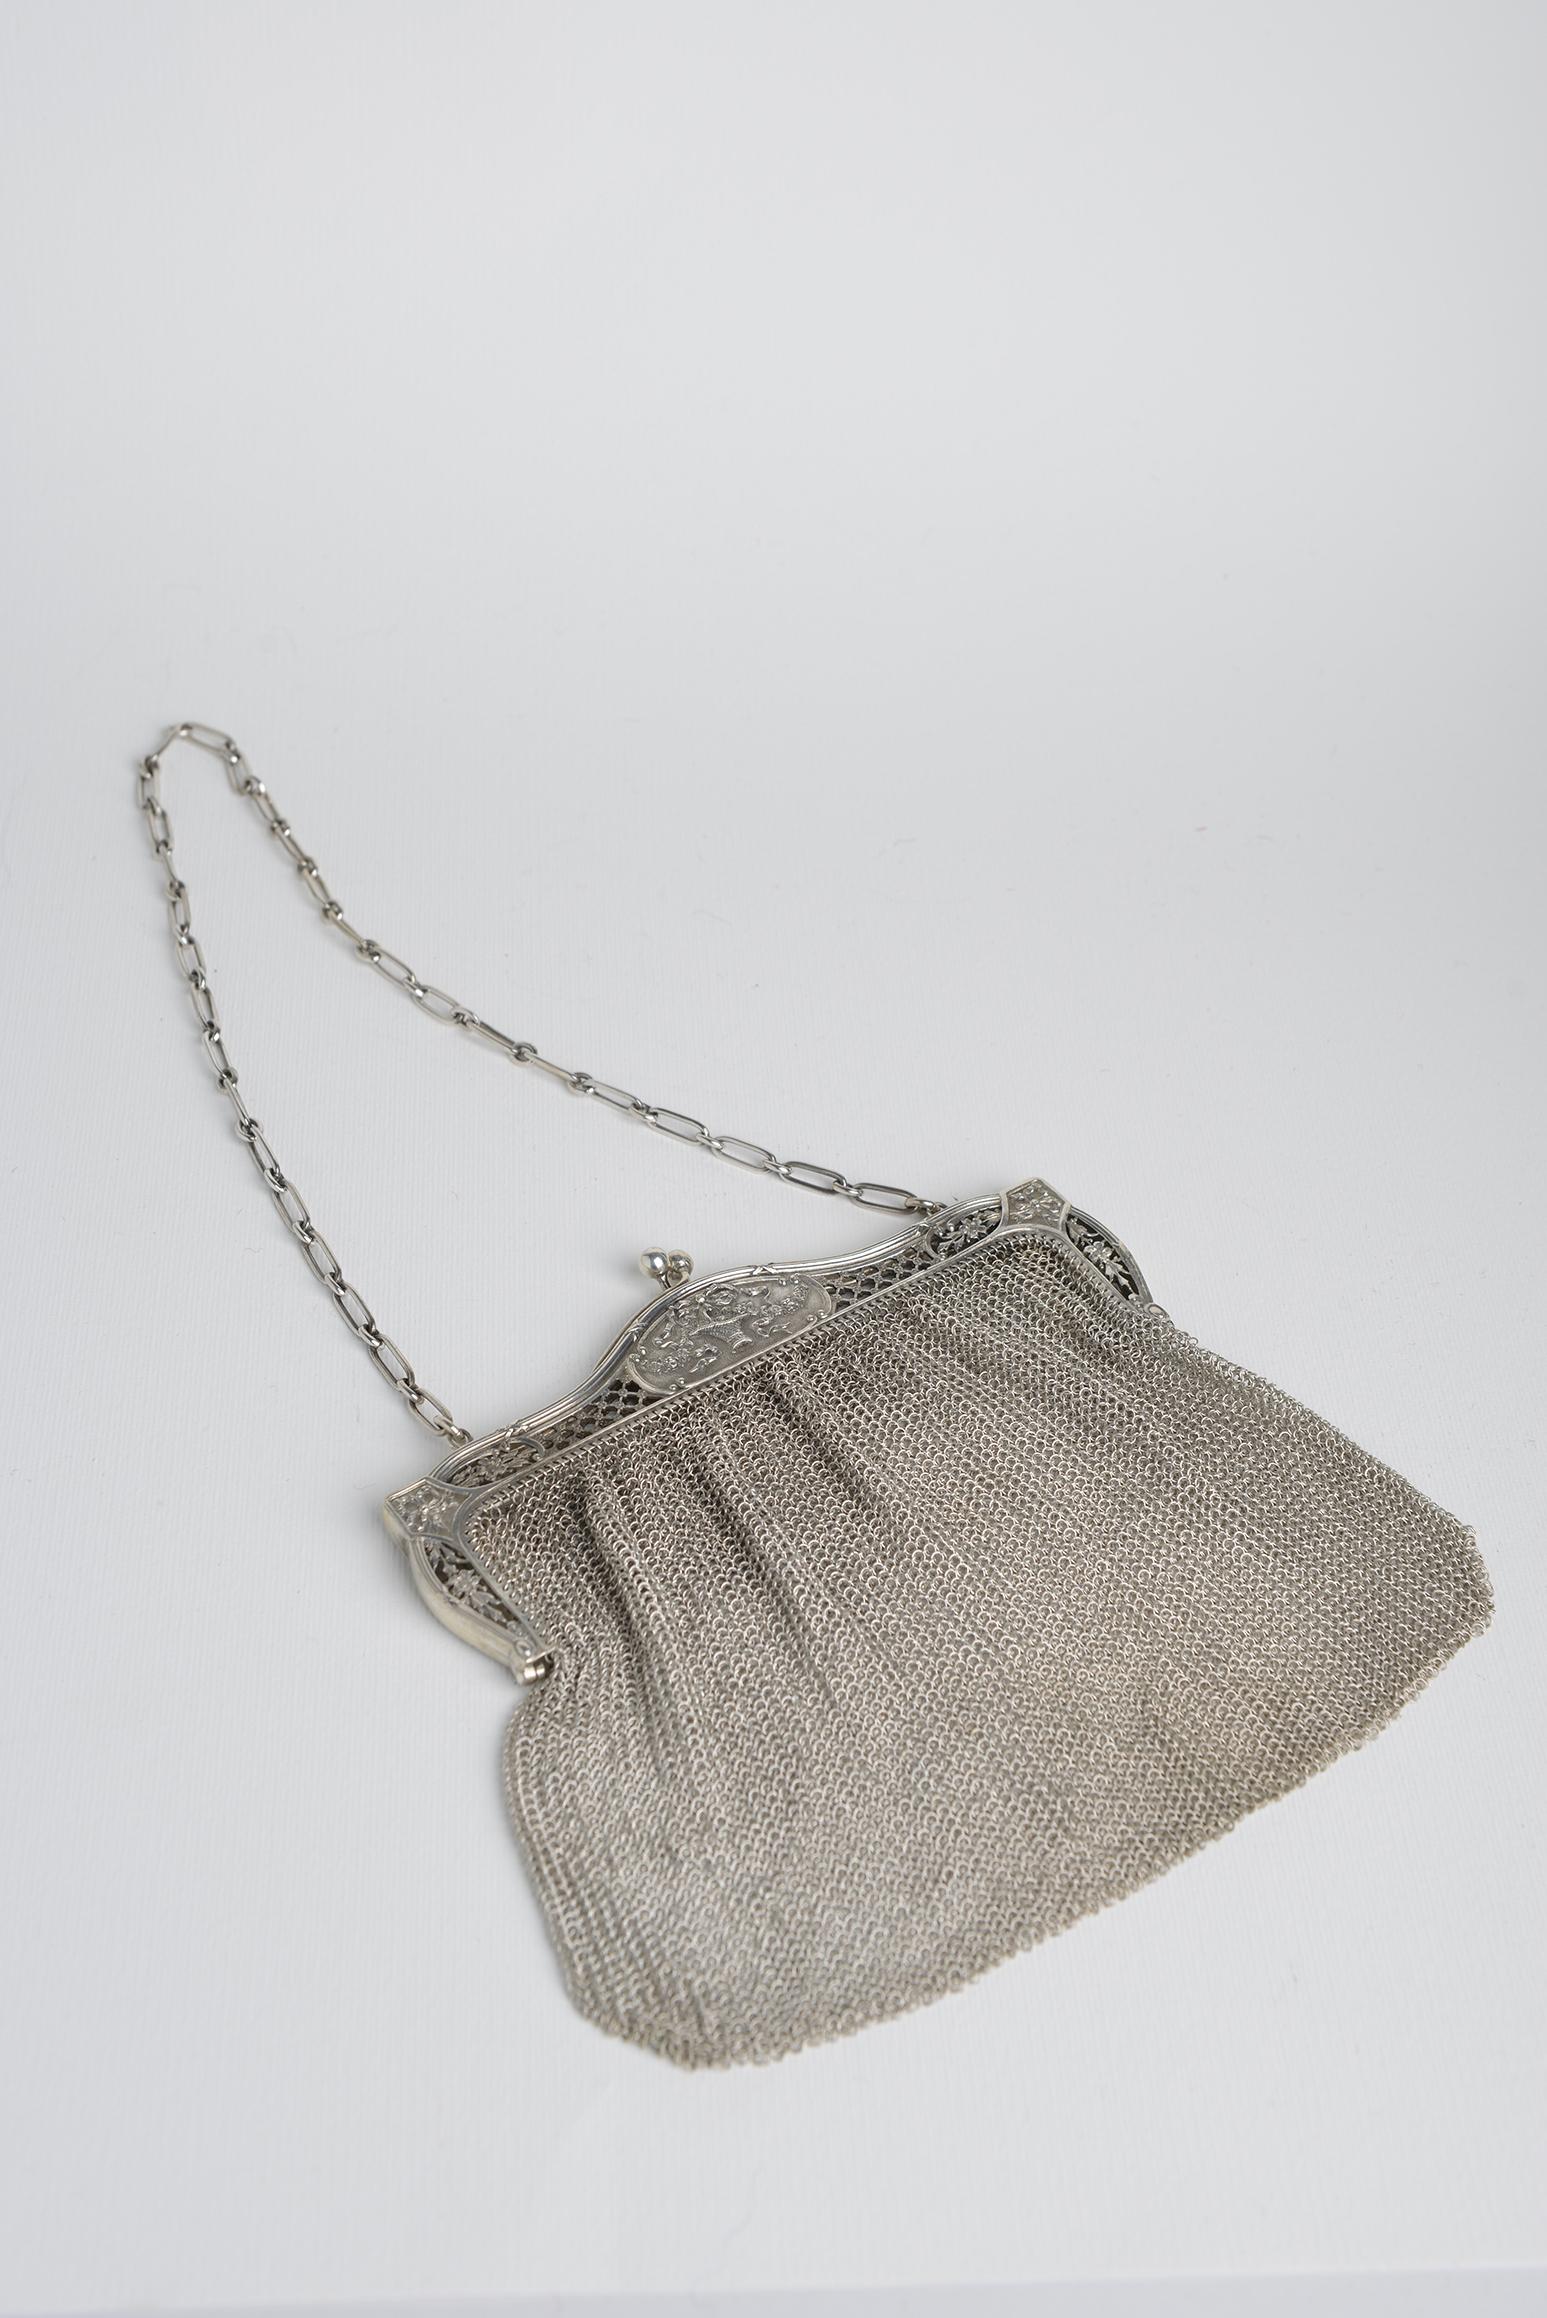  Italian Evening Silver Antique Handbag For Sale 2